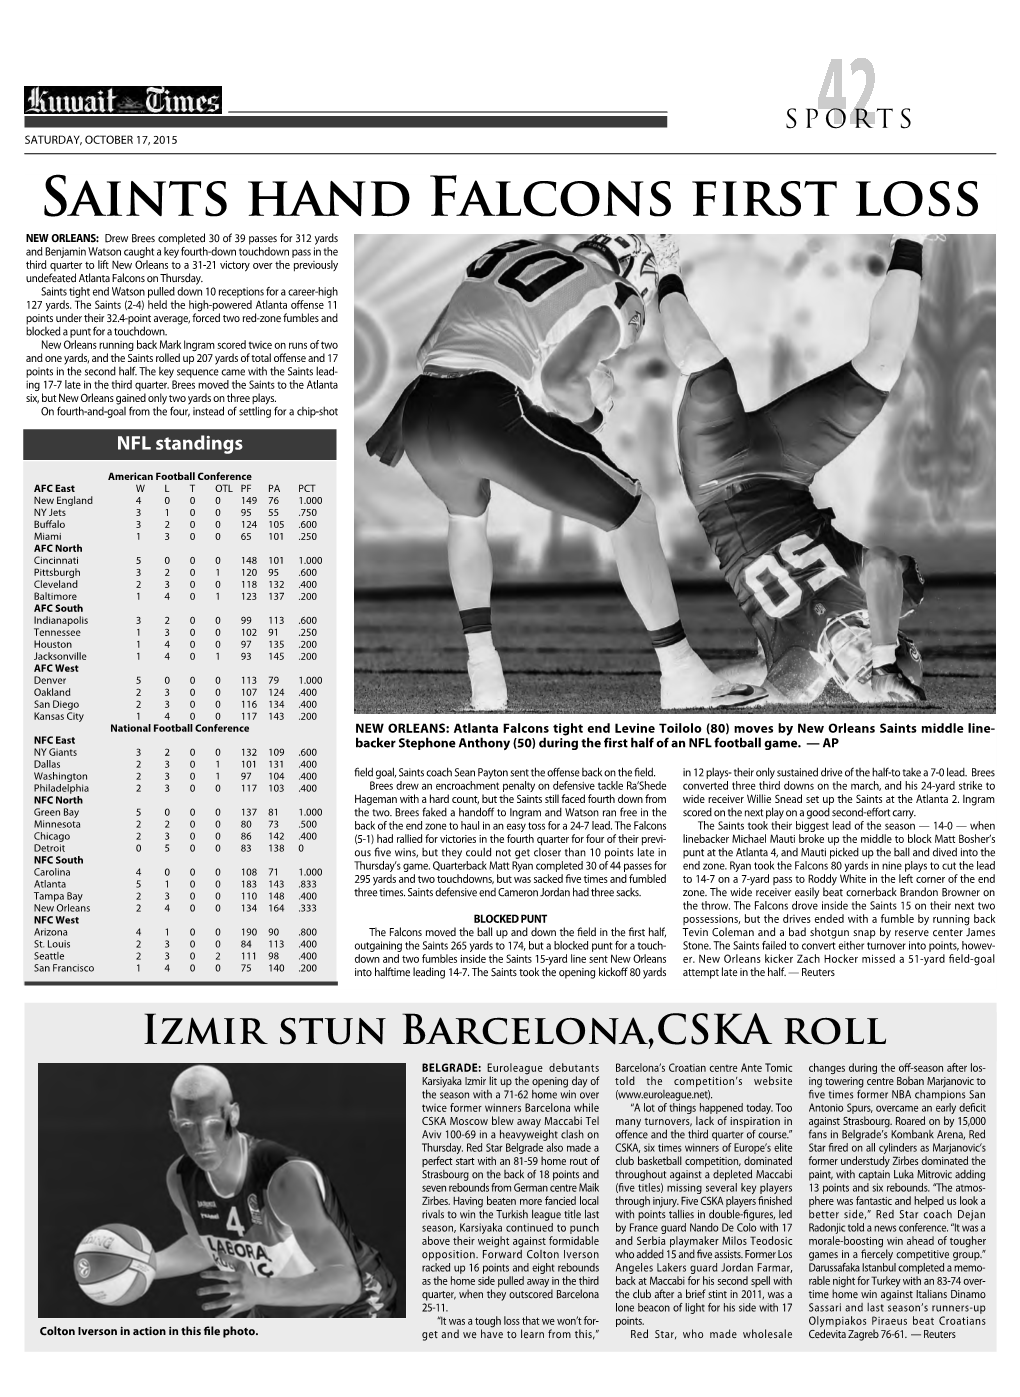 Saints Hand Falcons First Loss